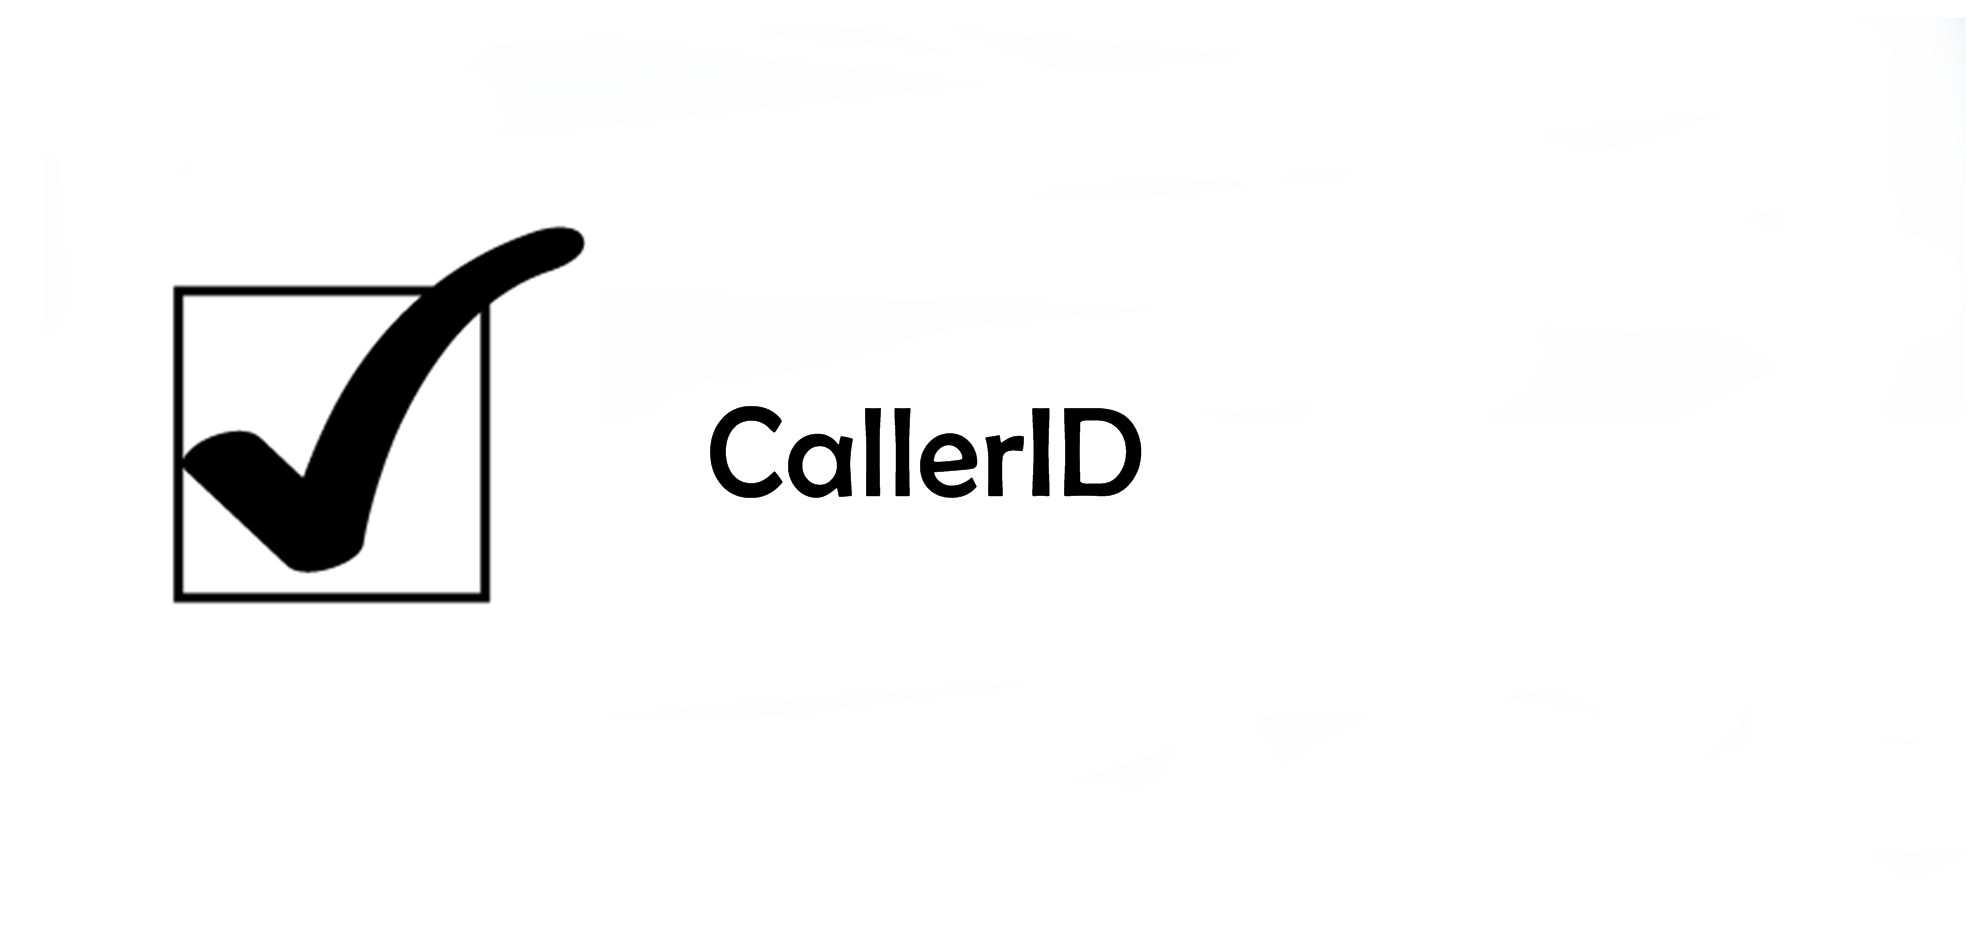 CallerID